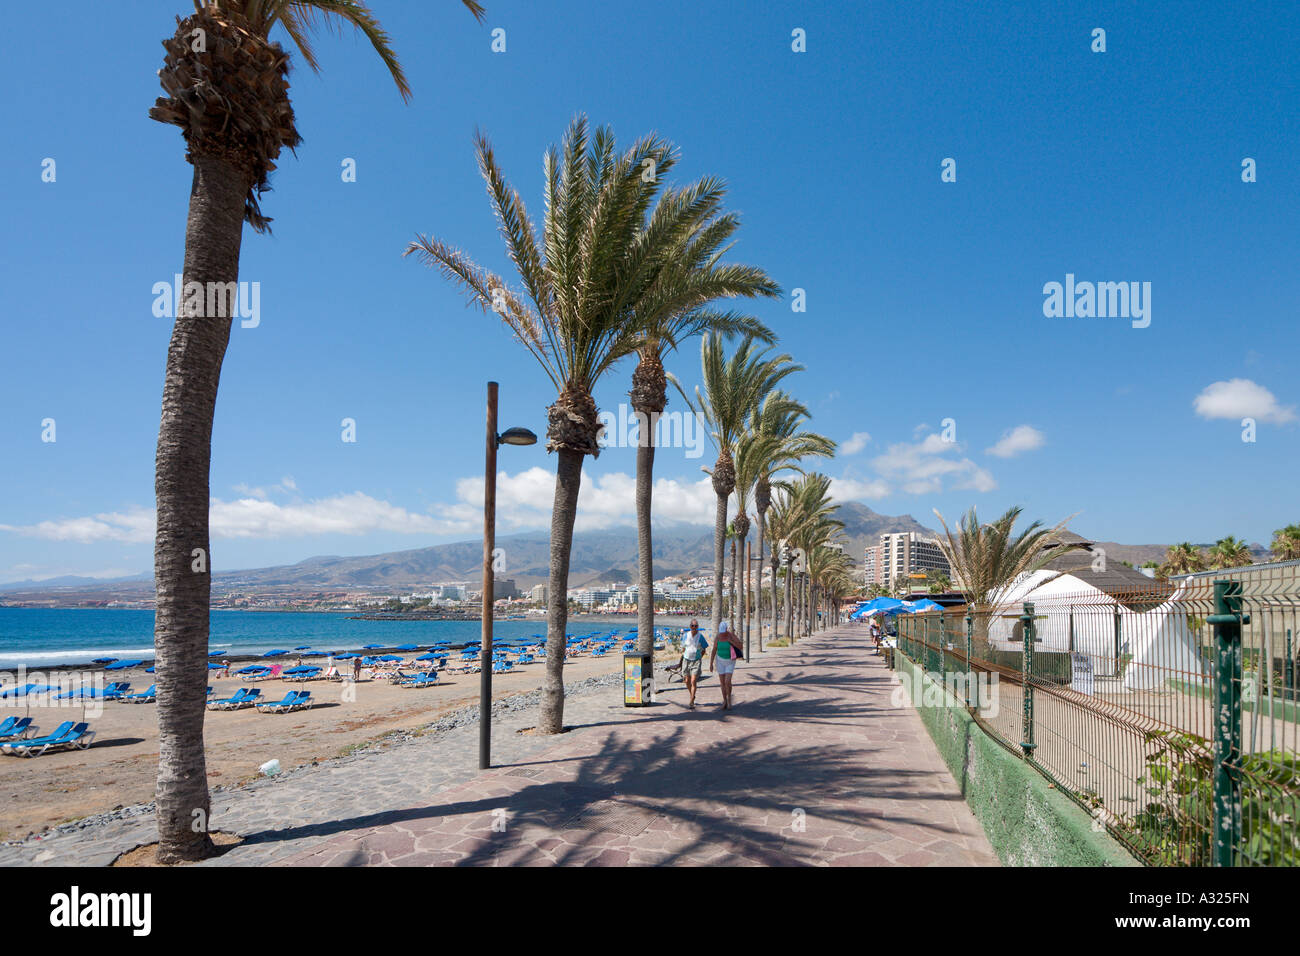 Playa de las americas promenade hi-res stock photography and images - Alamy